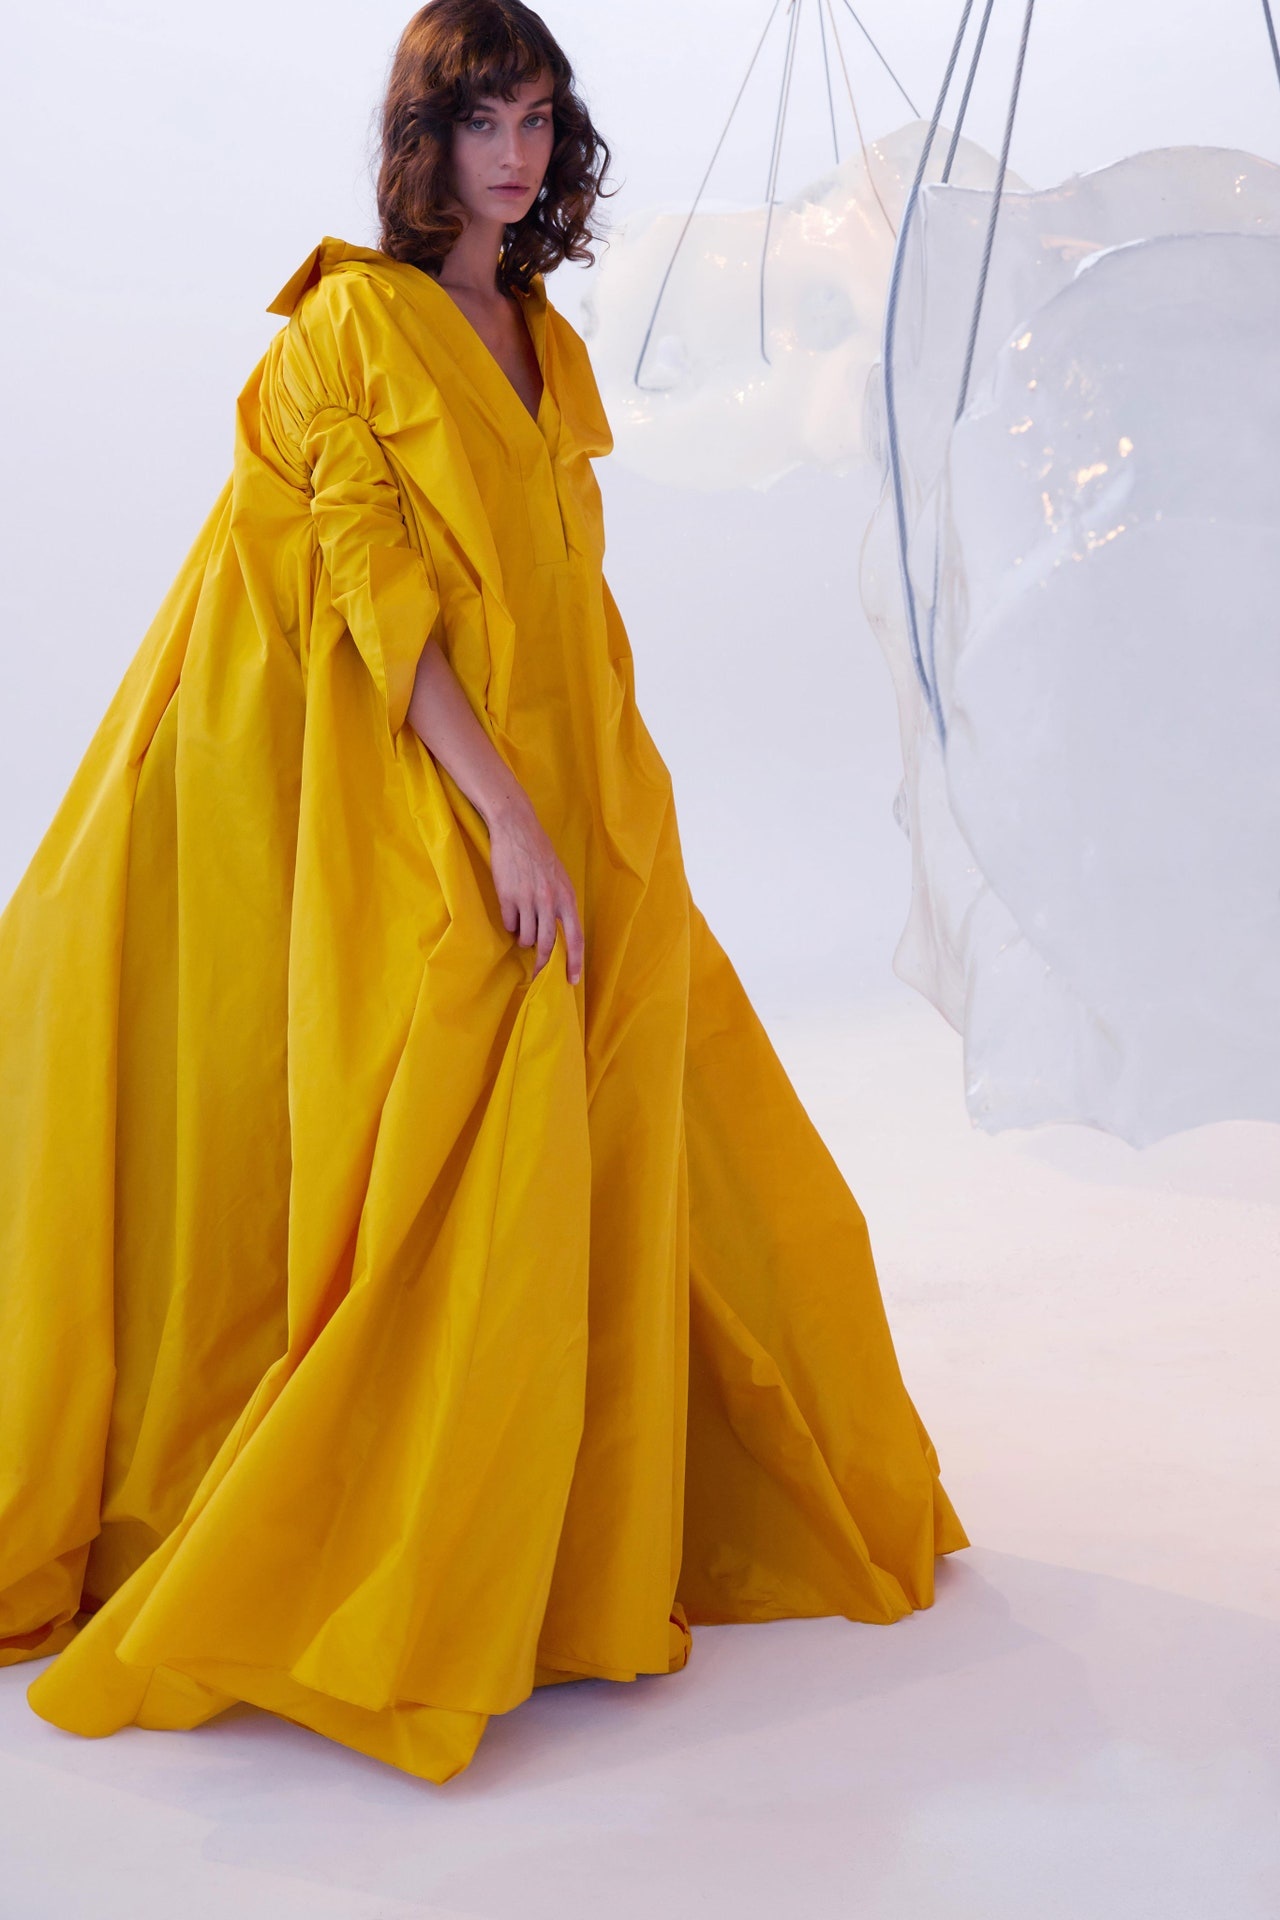 Maison Rabih Kayrouz Fall Winter 2022-23 Haute Couture Lookbook